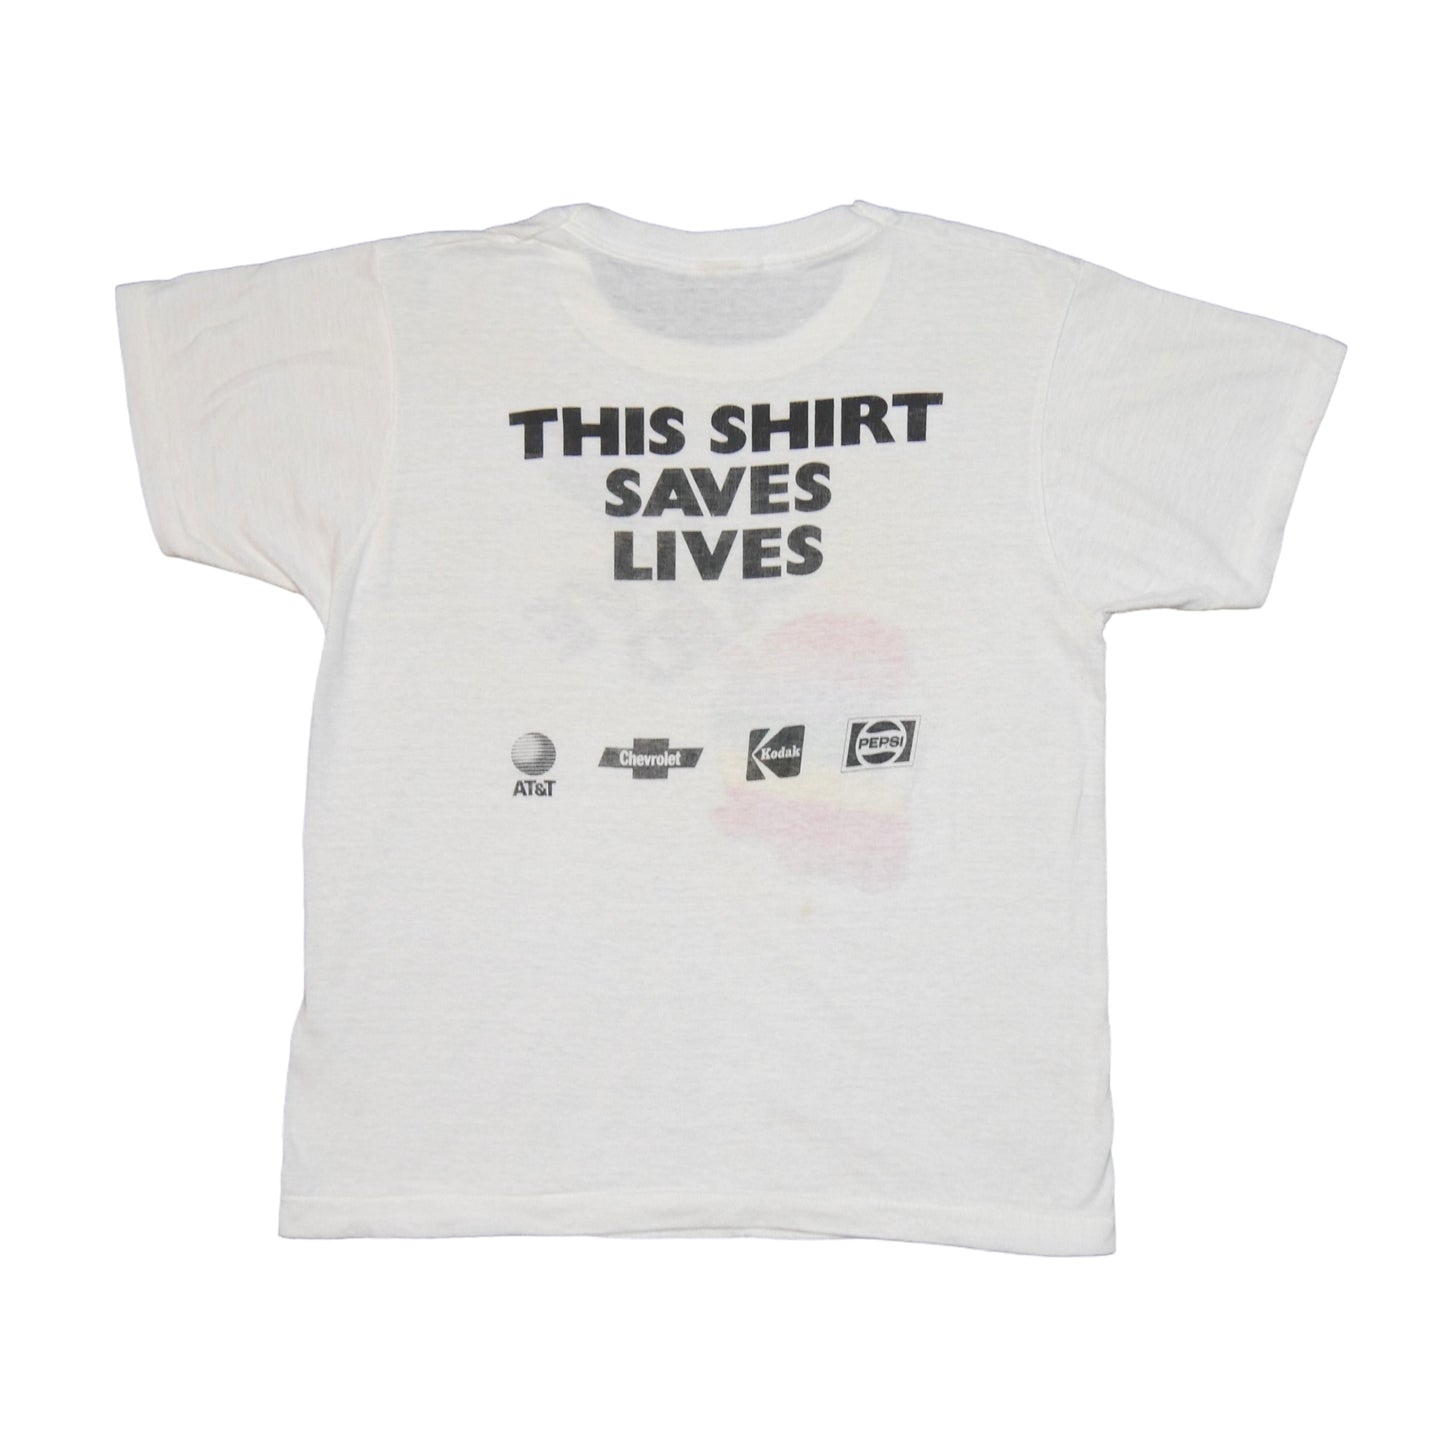 Live Aid ‘This Shirt Saves Lives’ 1985 Shirt - Large